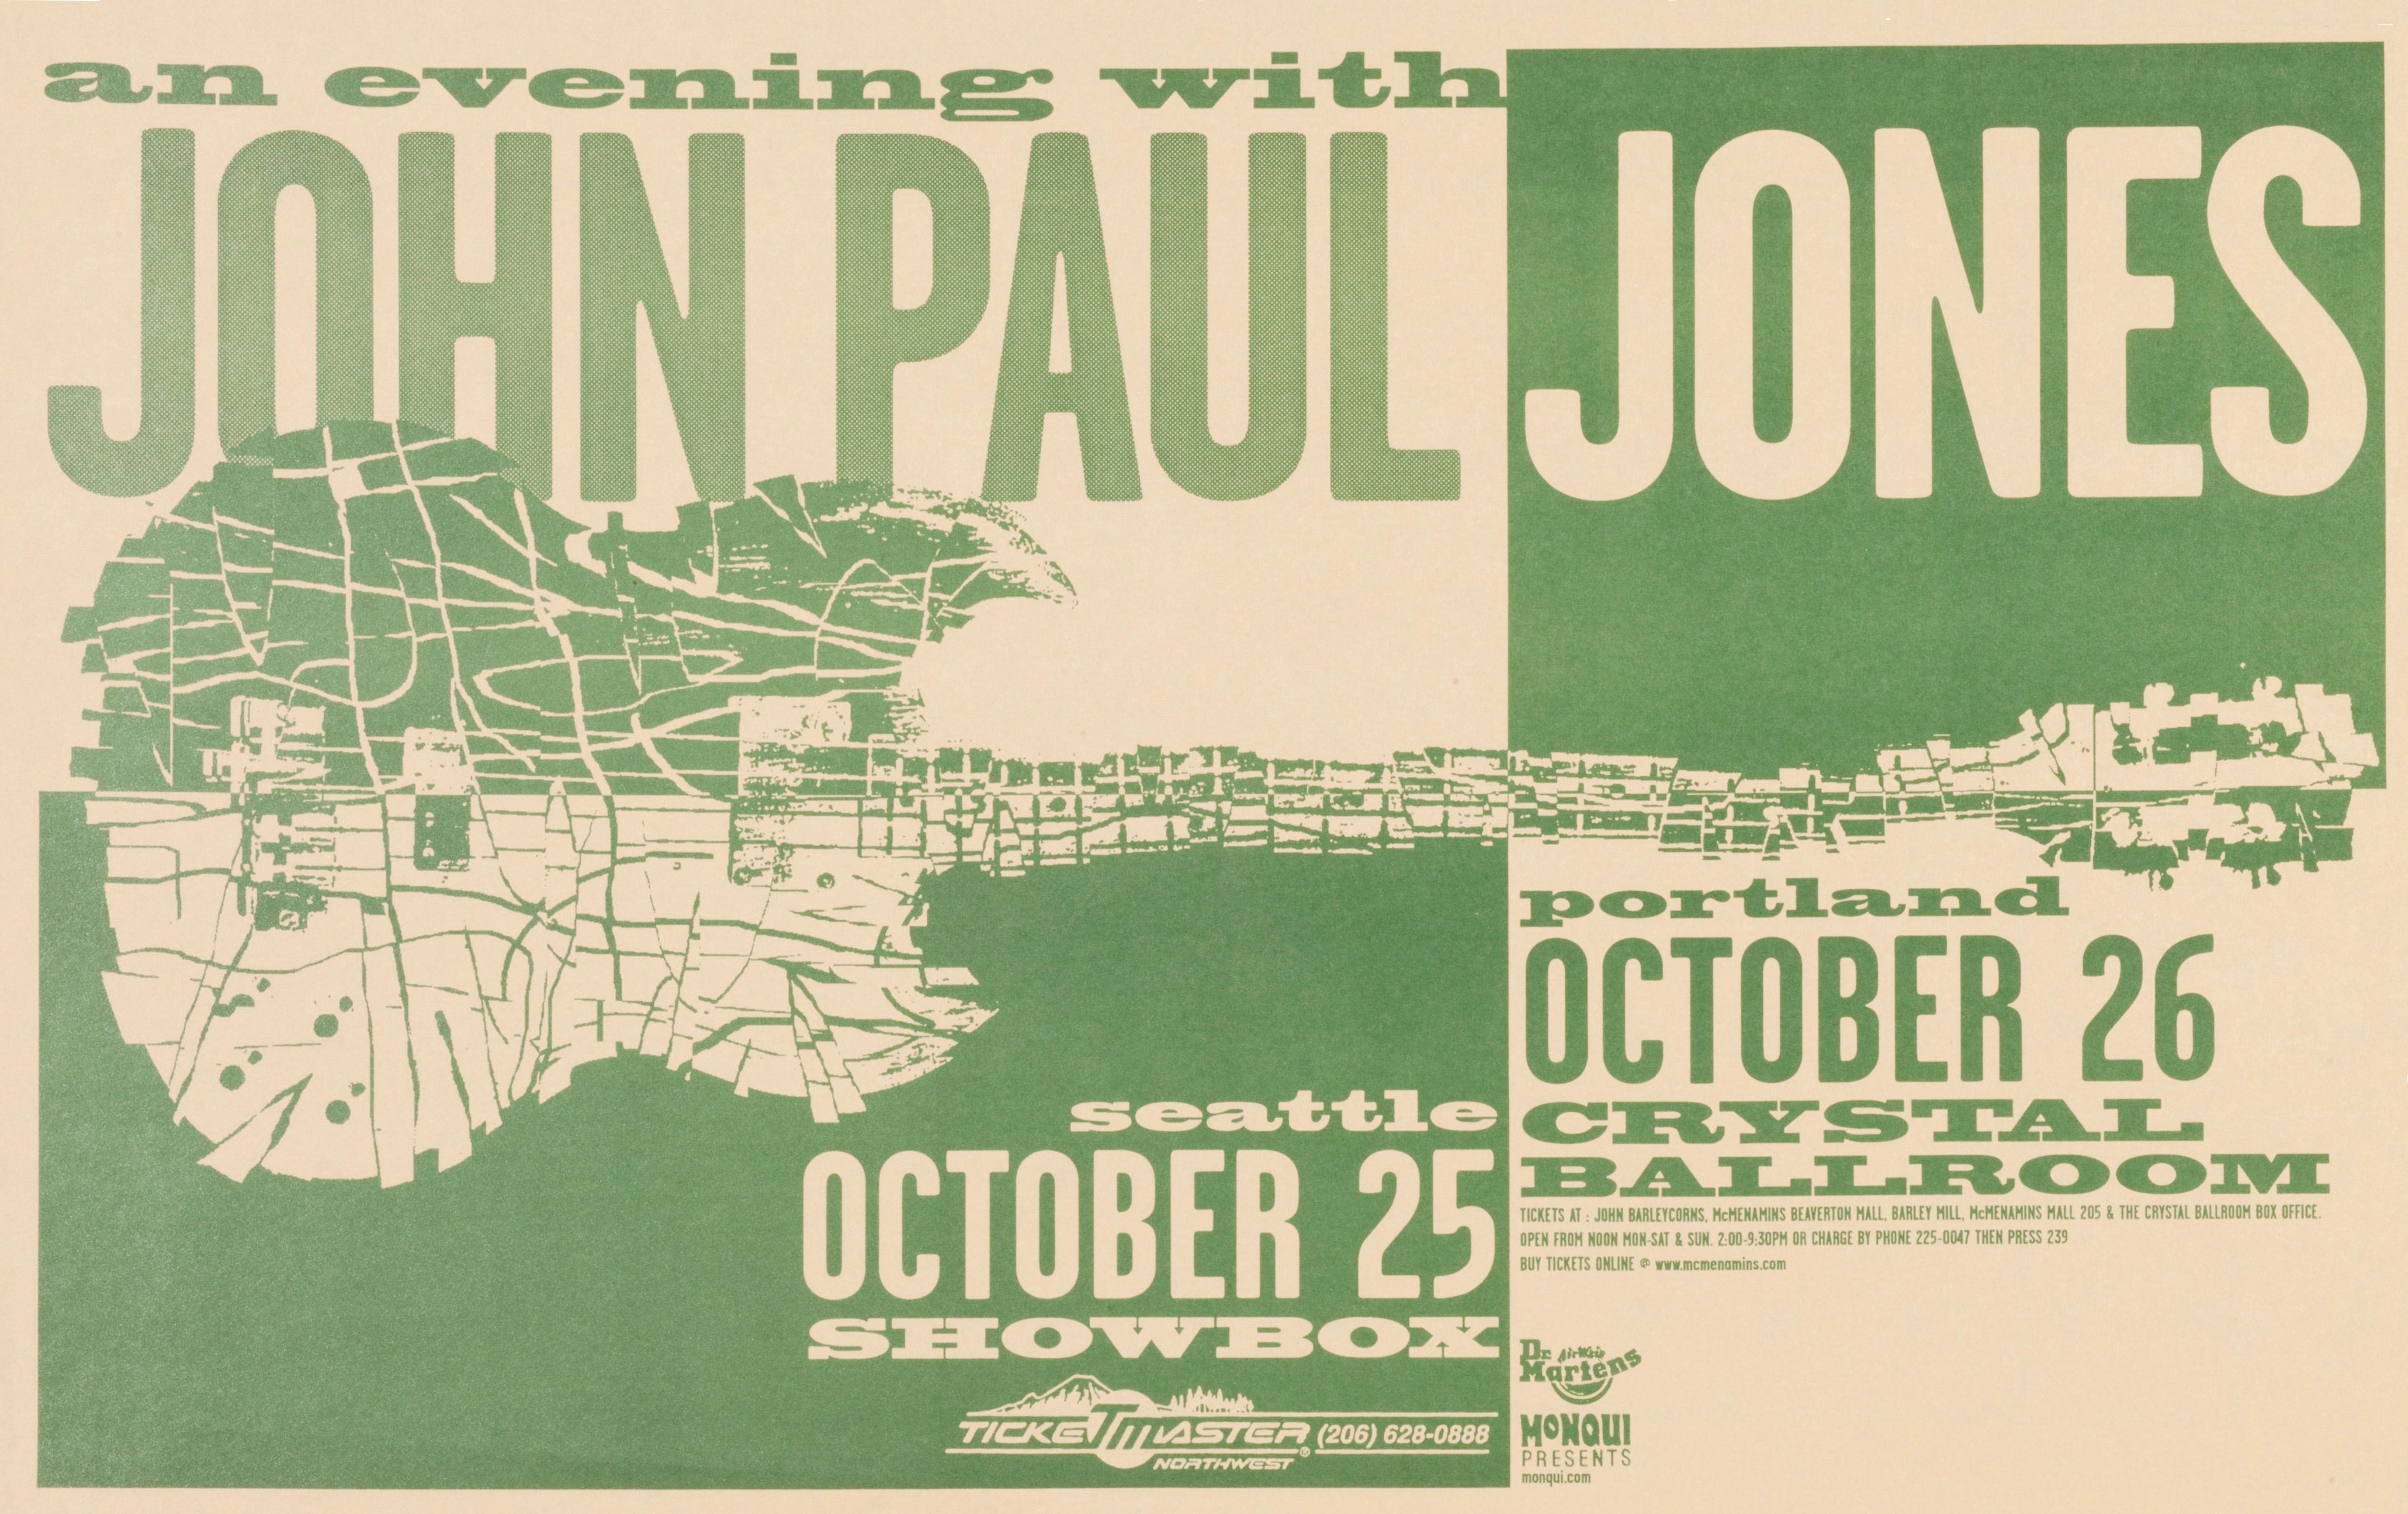 MXP-189.2 John Paul Jones Showbox & Crystal Ballroom 1999 Concert Poster